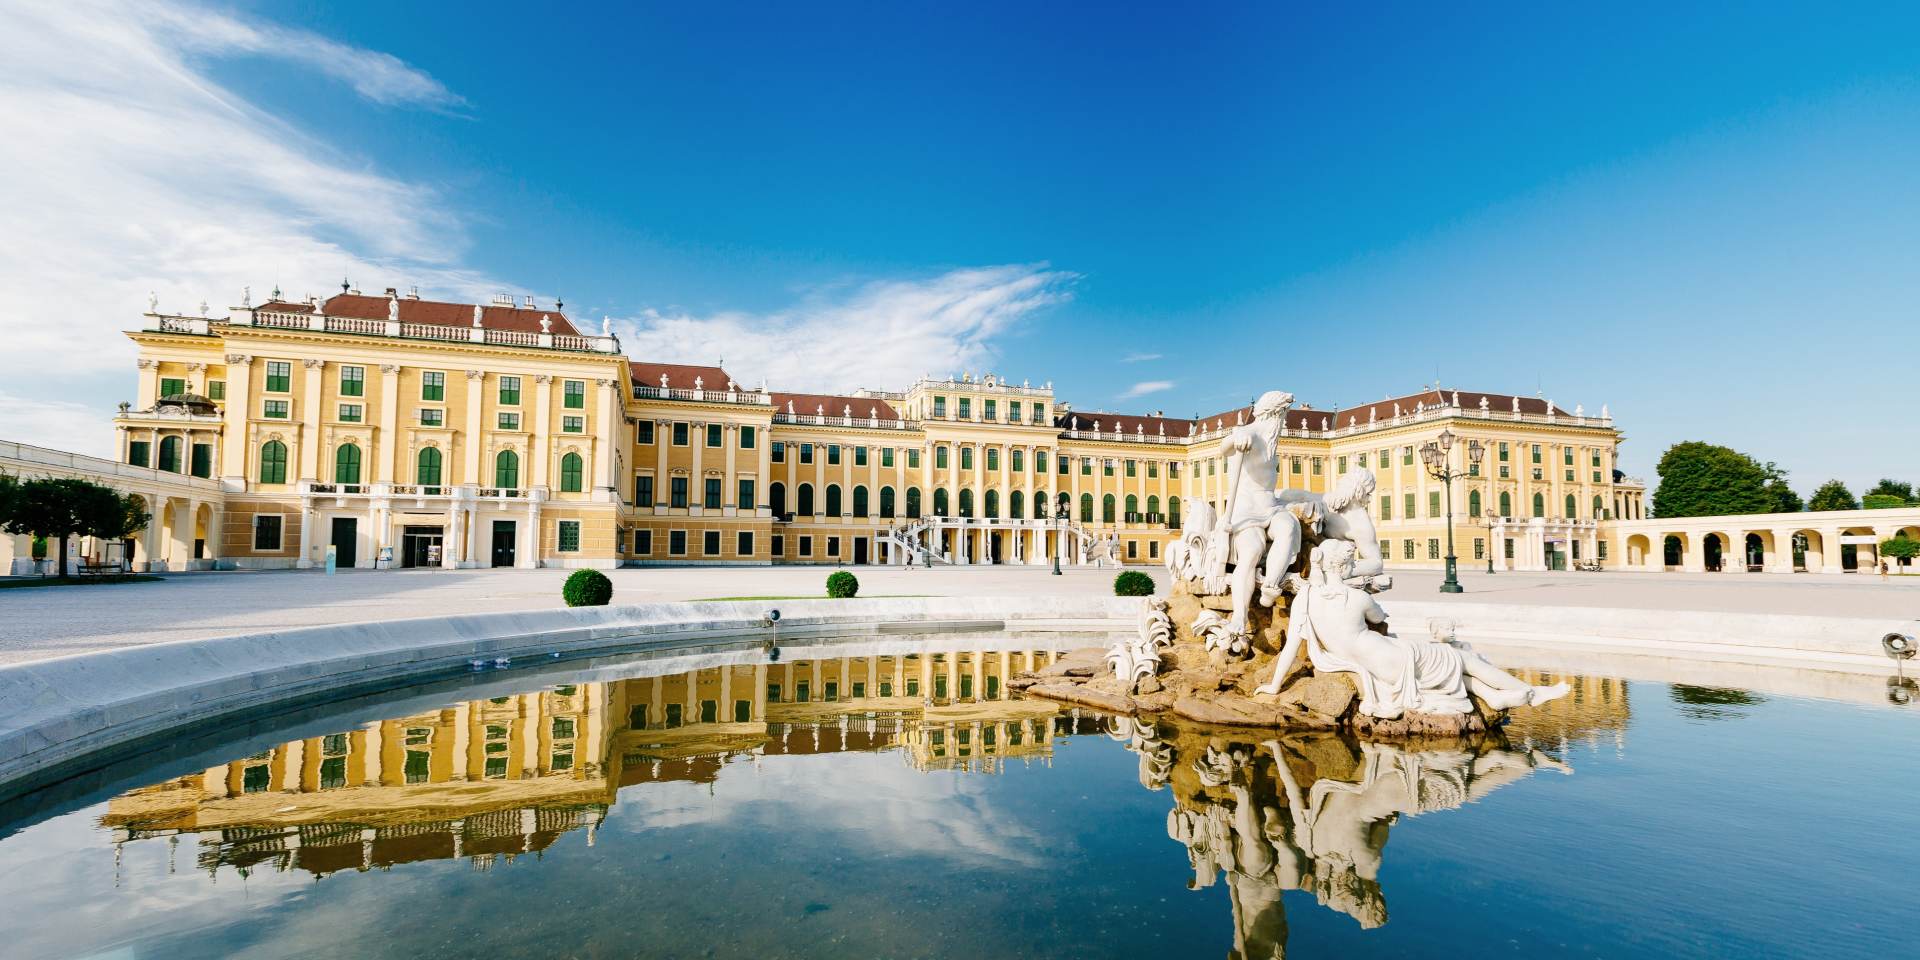 Historical city tour Vienna - Schönbrunn Palace and fountain © Vienna Sightseeing Tours | Bernhard Luck